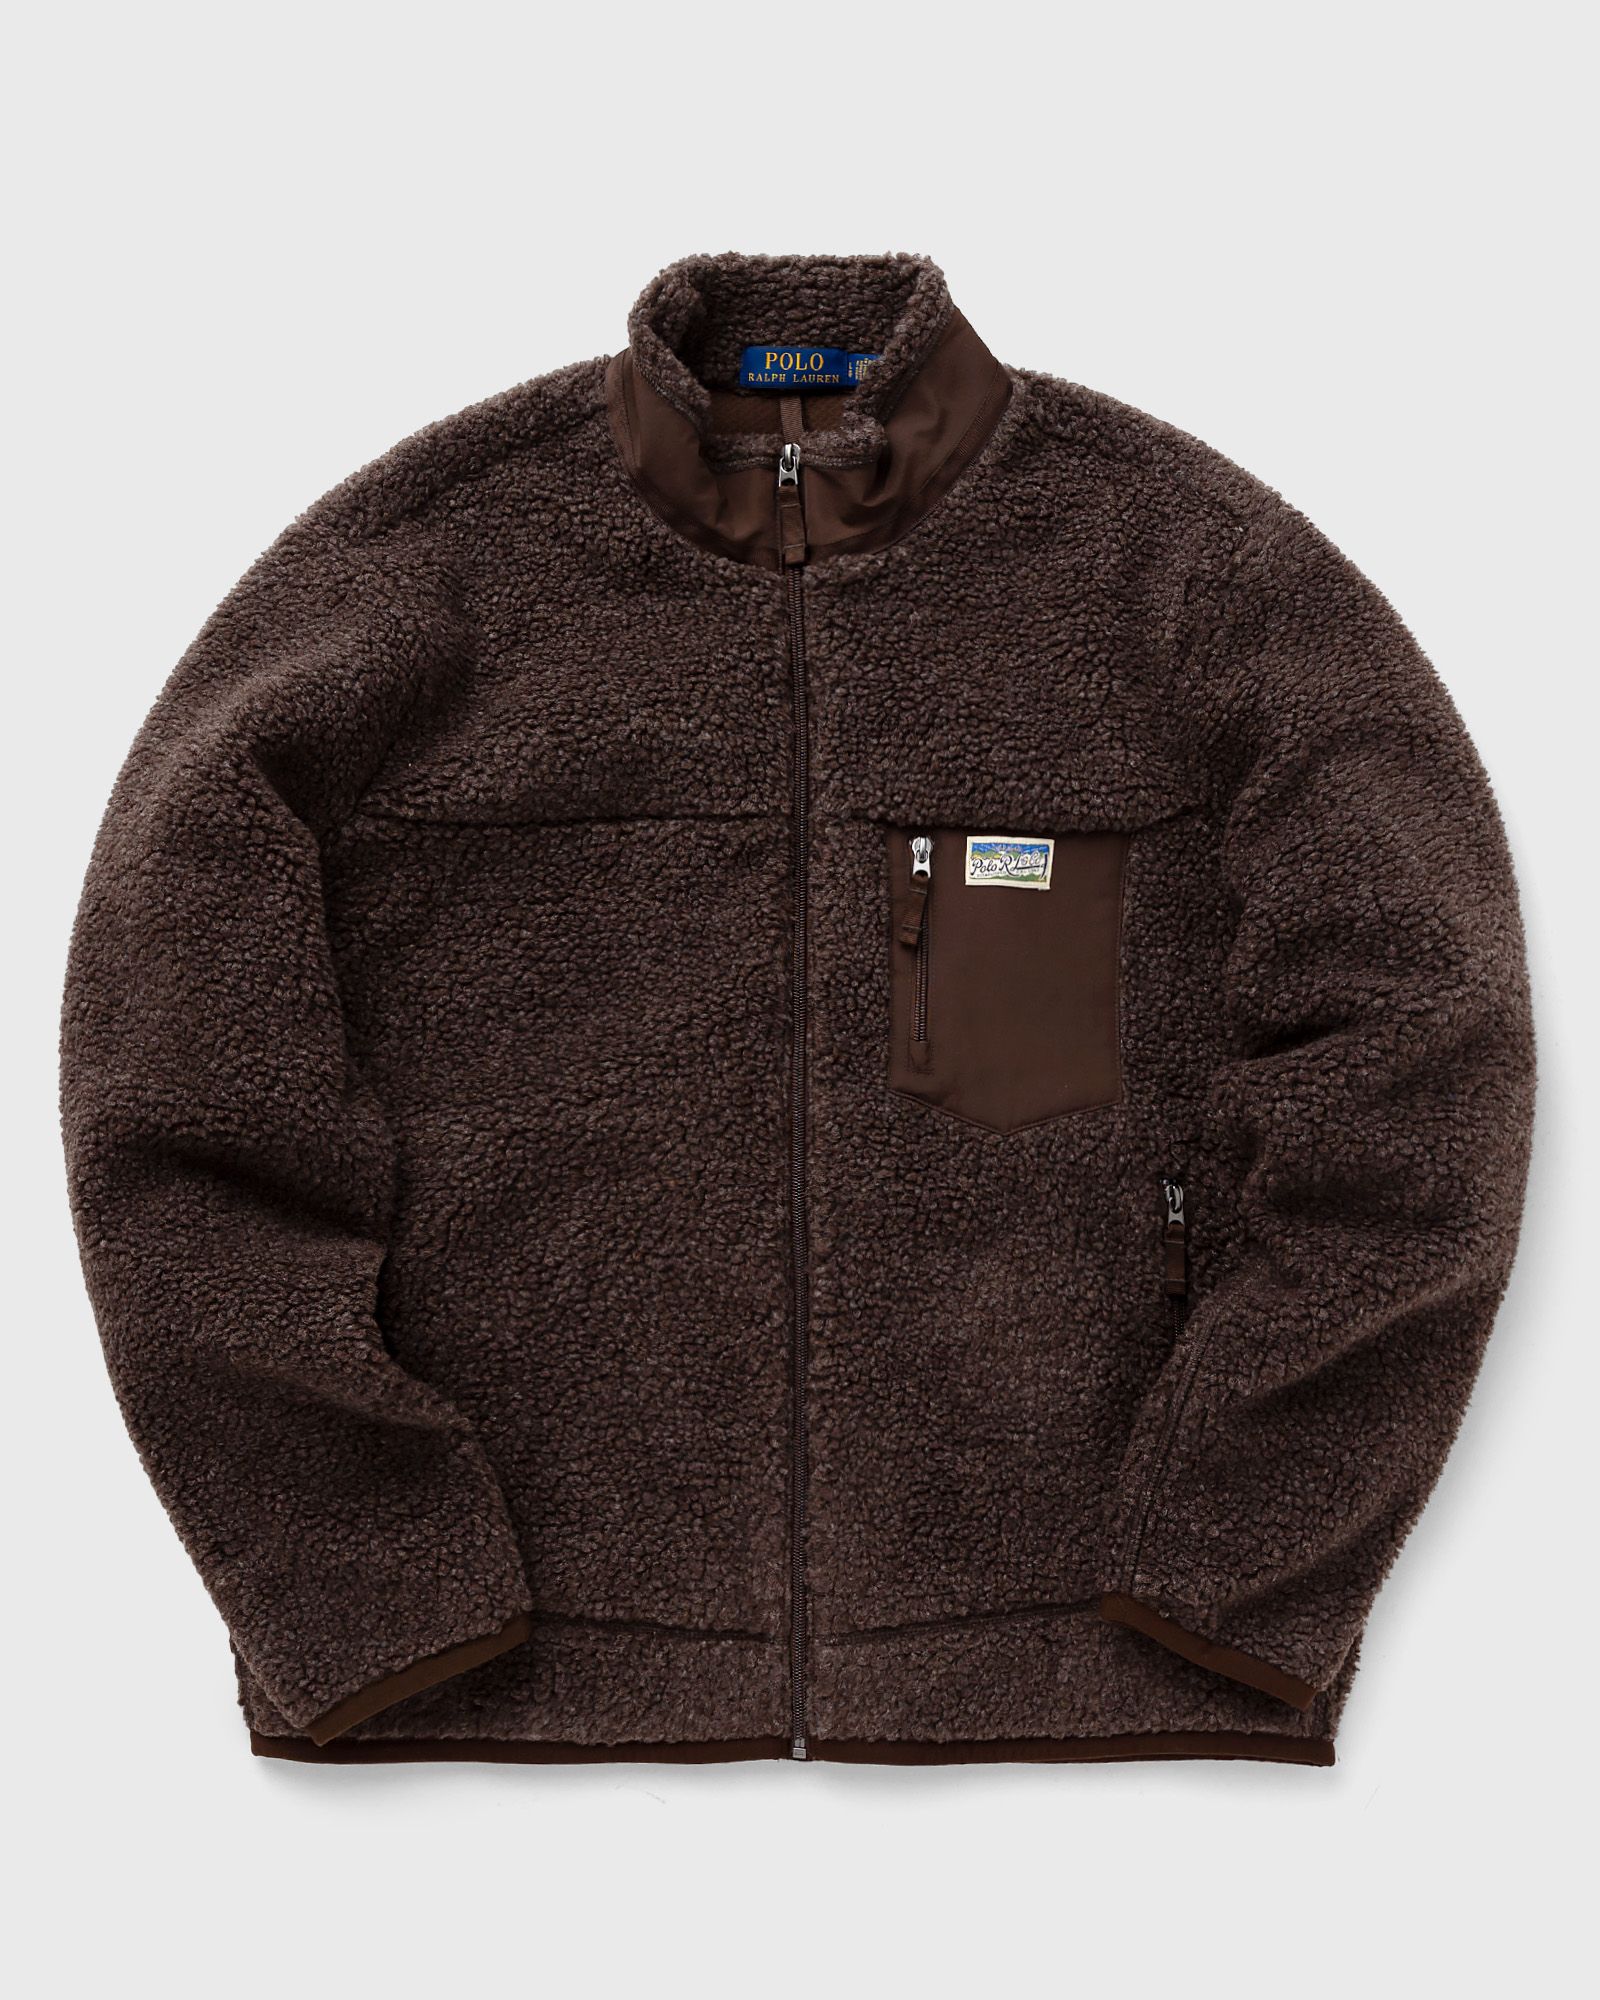 Polo Ralph Lauren - long sleeve-sweatshirt men fleece jackets brown in größe:xl